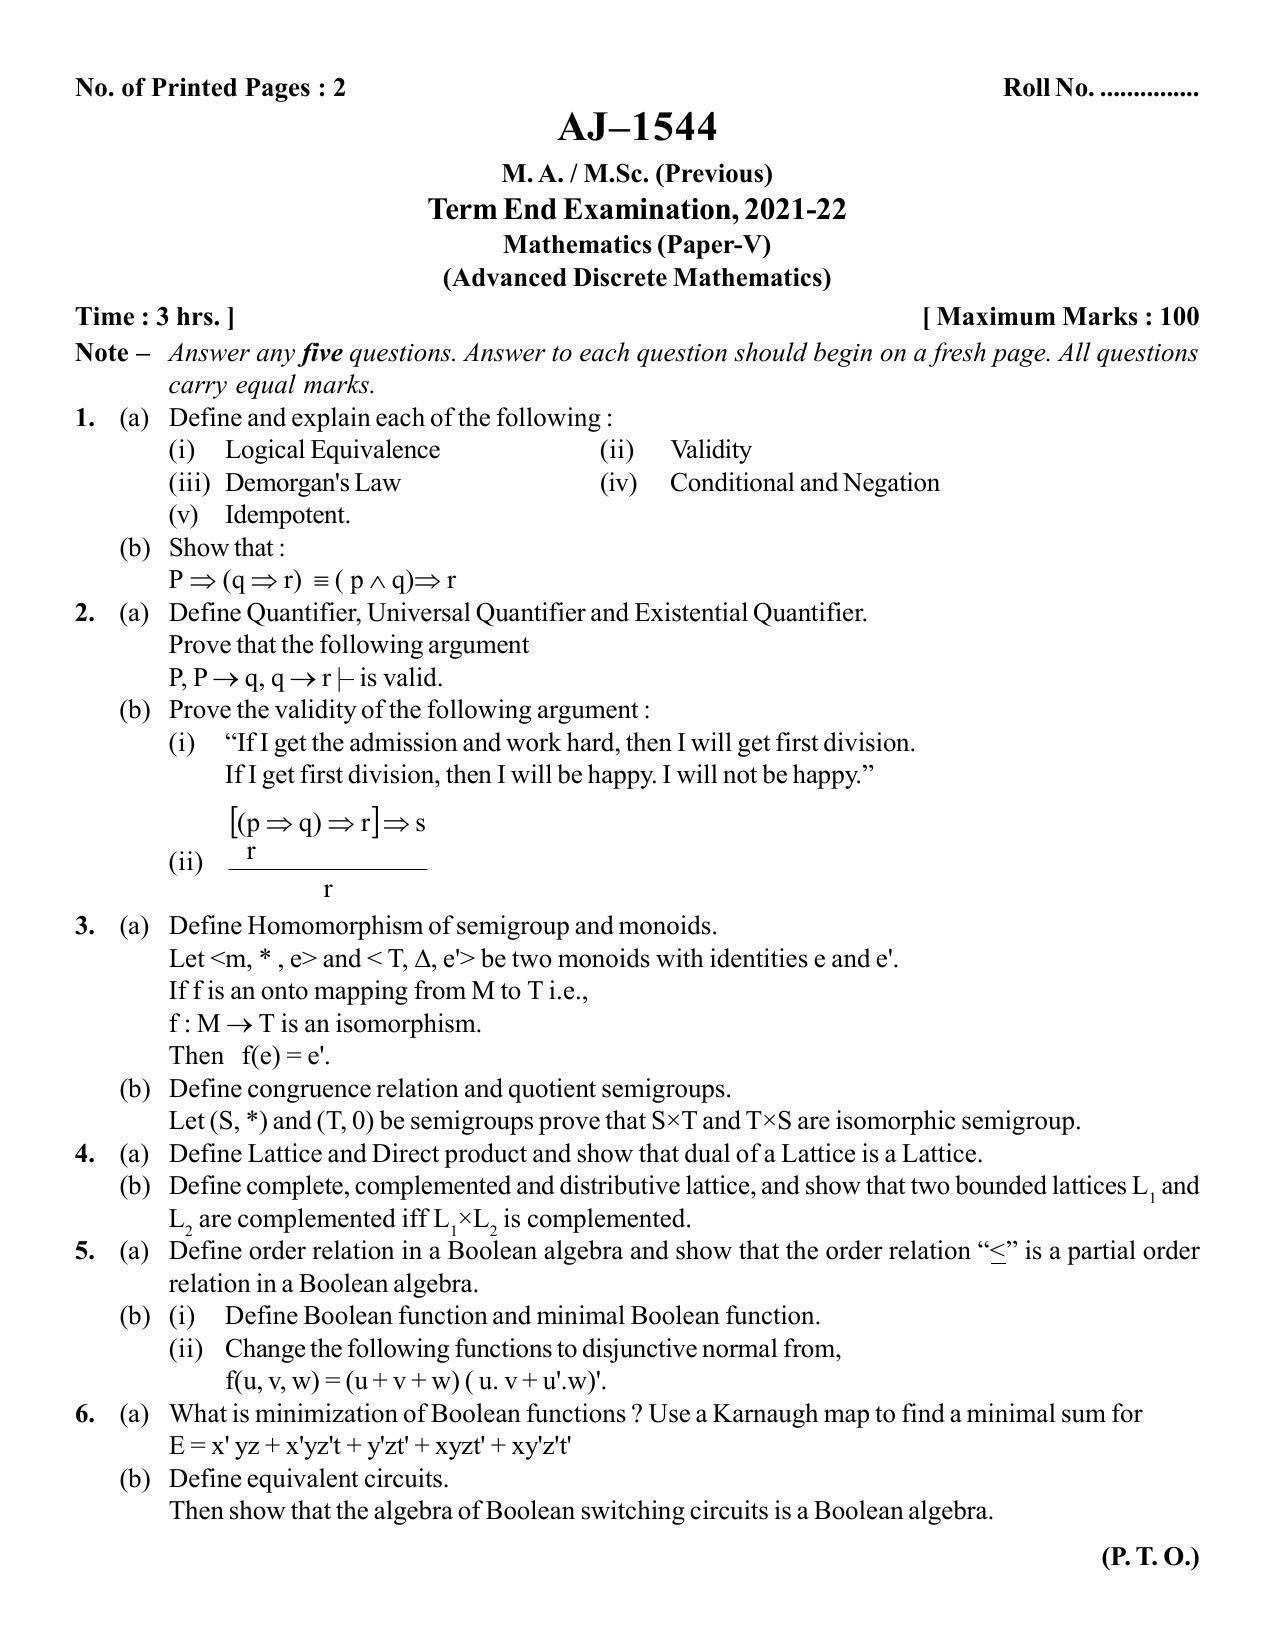 Bilaspur University Question Paper 2021-2022:M.A (Previous) Mathematics  Advance Discrete Mathematics Paper 1 - Page 1